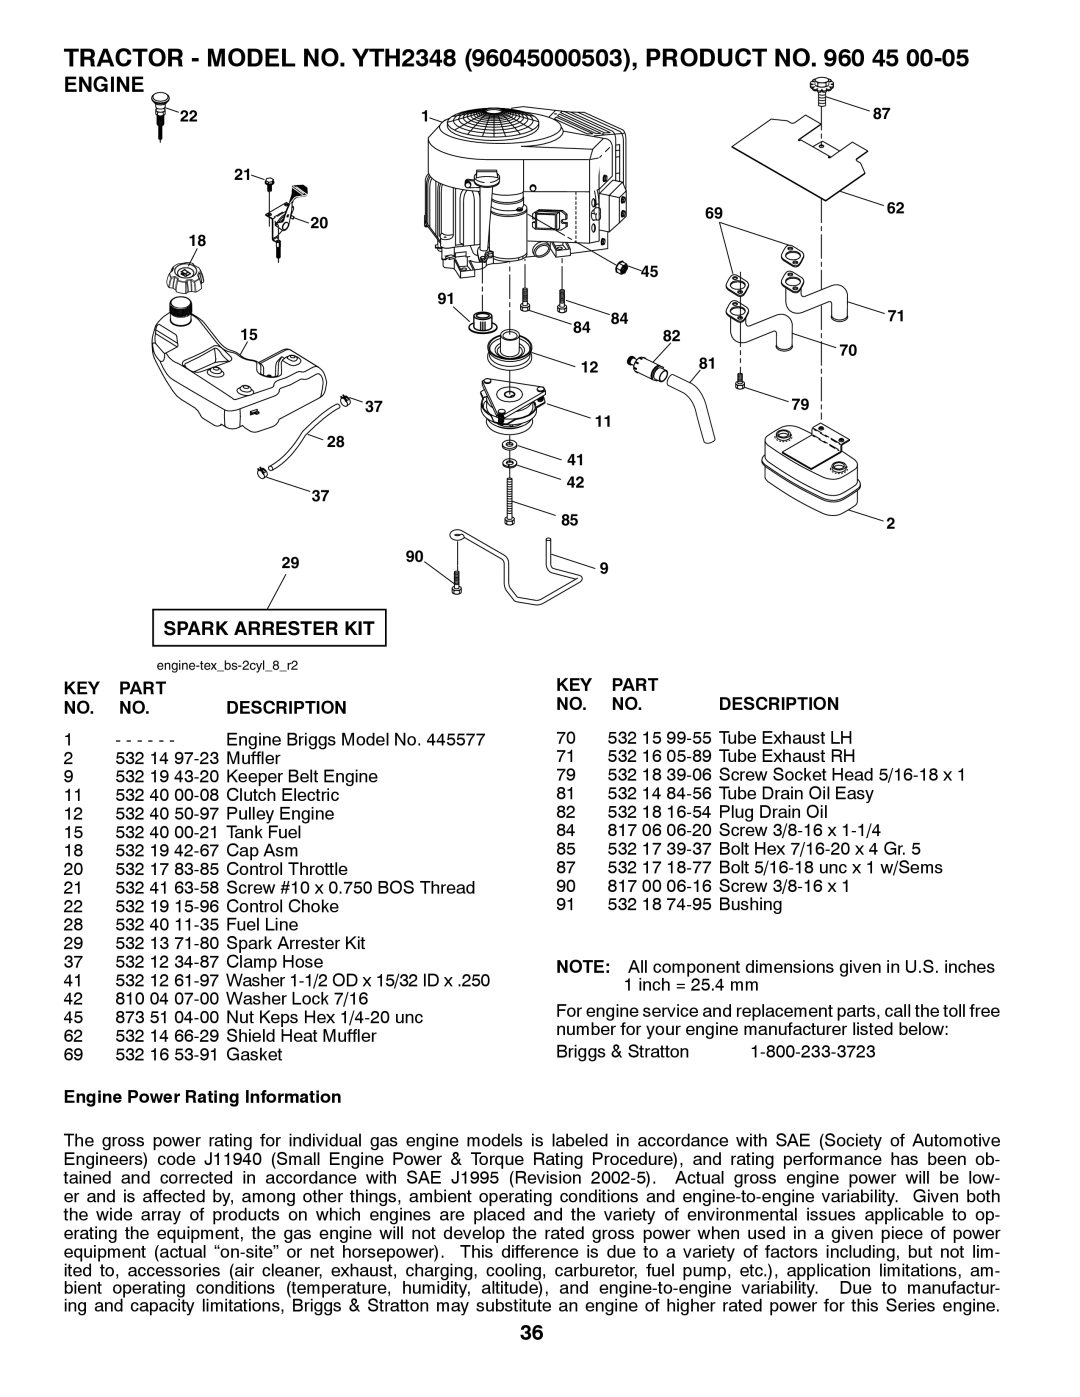 Husqvarna Engine, TRACTOR - MODEL NO. YTH2348 96045000503, PRODUCT NO, Spark Arrester Kit, Key Part No. No. Description 